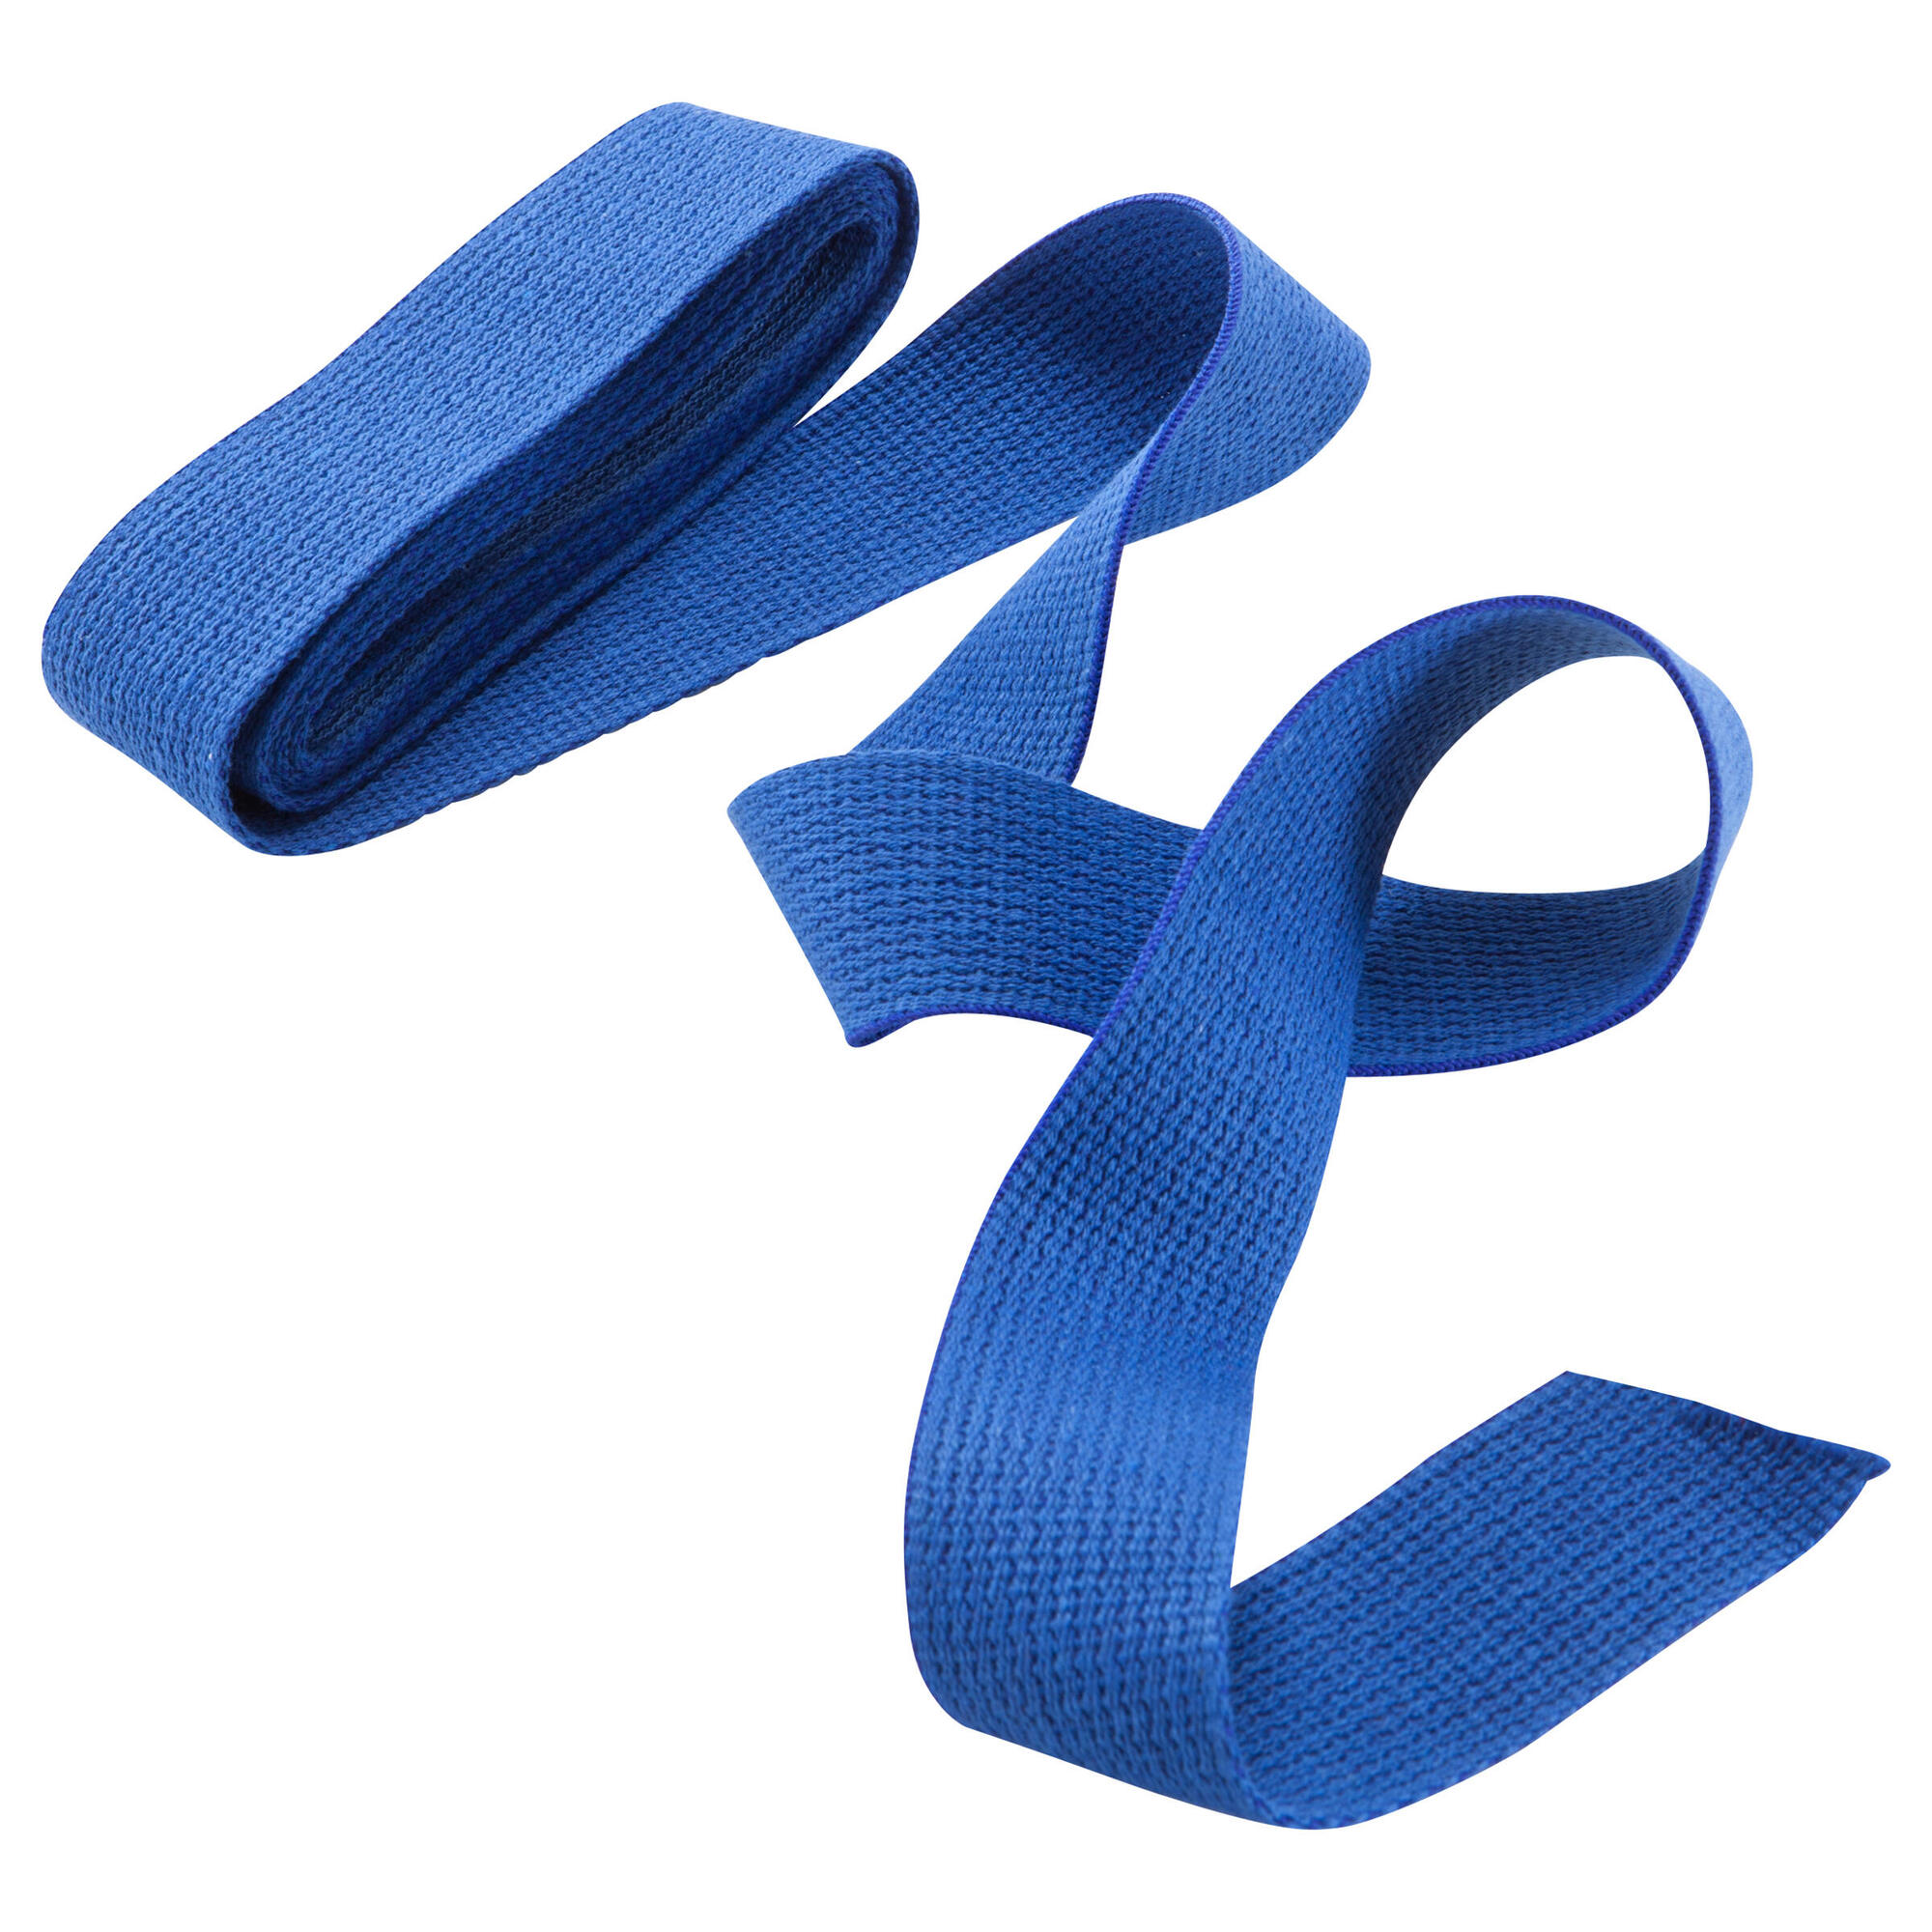 2.5m Plain Martial Arts Belt - Blue | Domyos by Decathlon